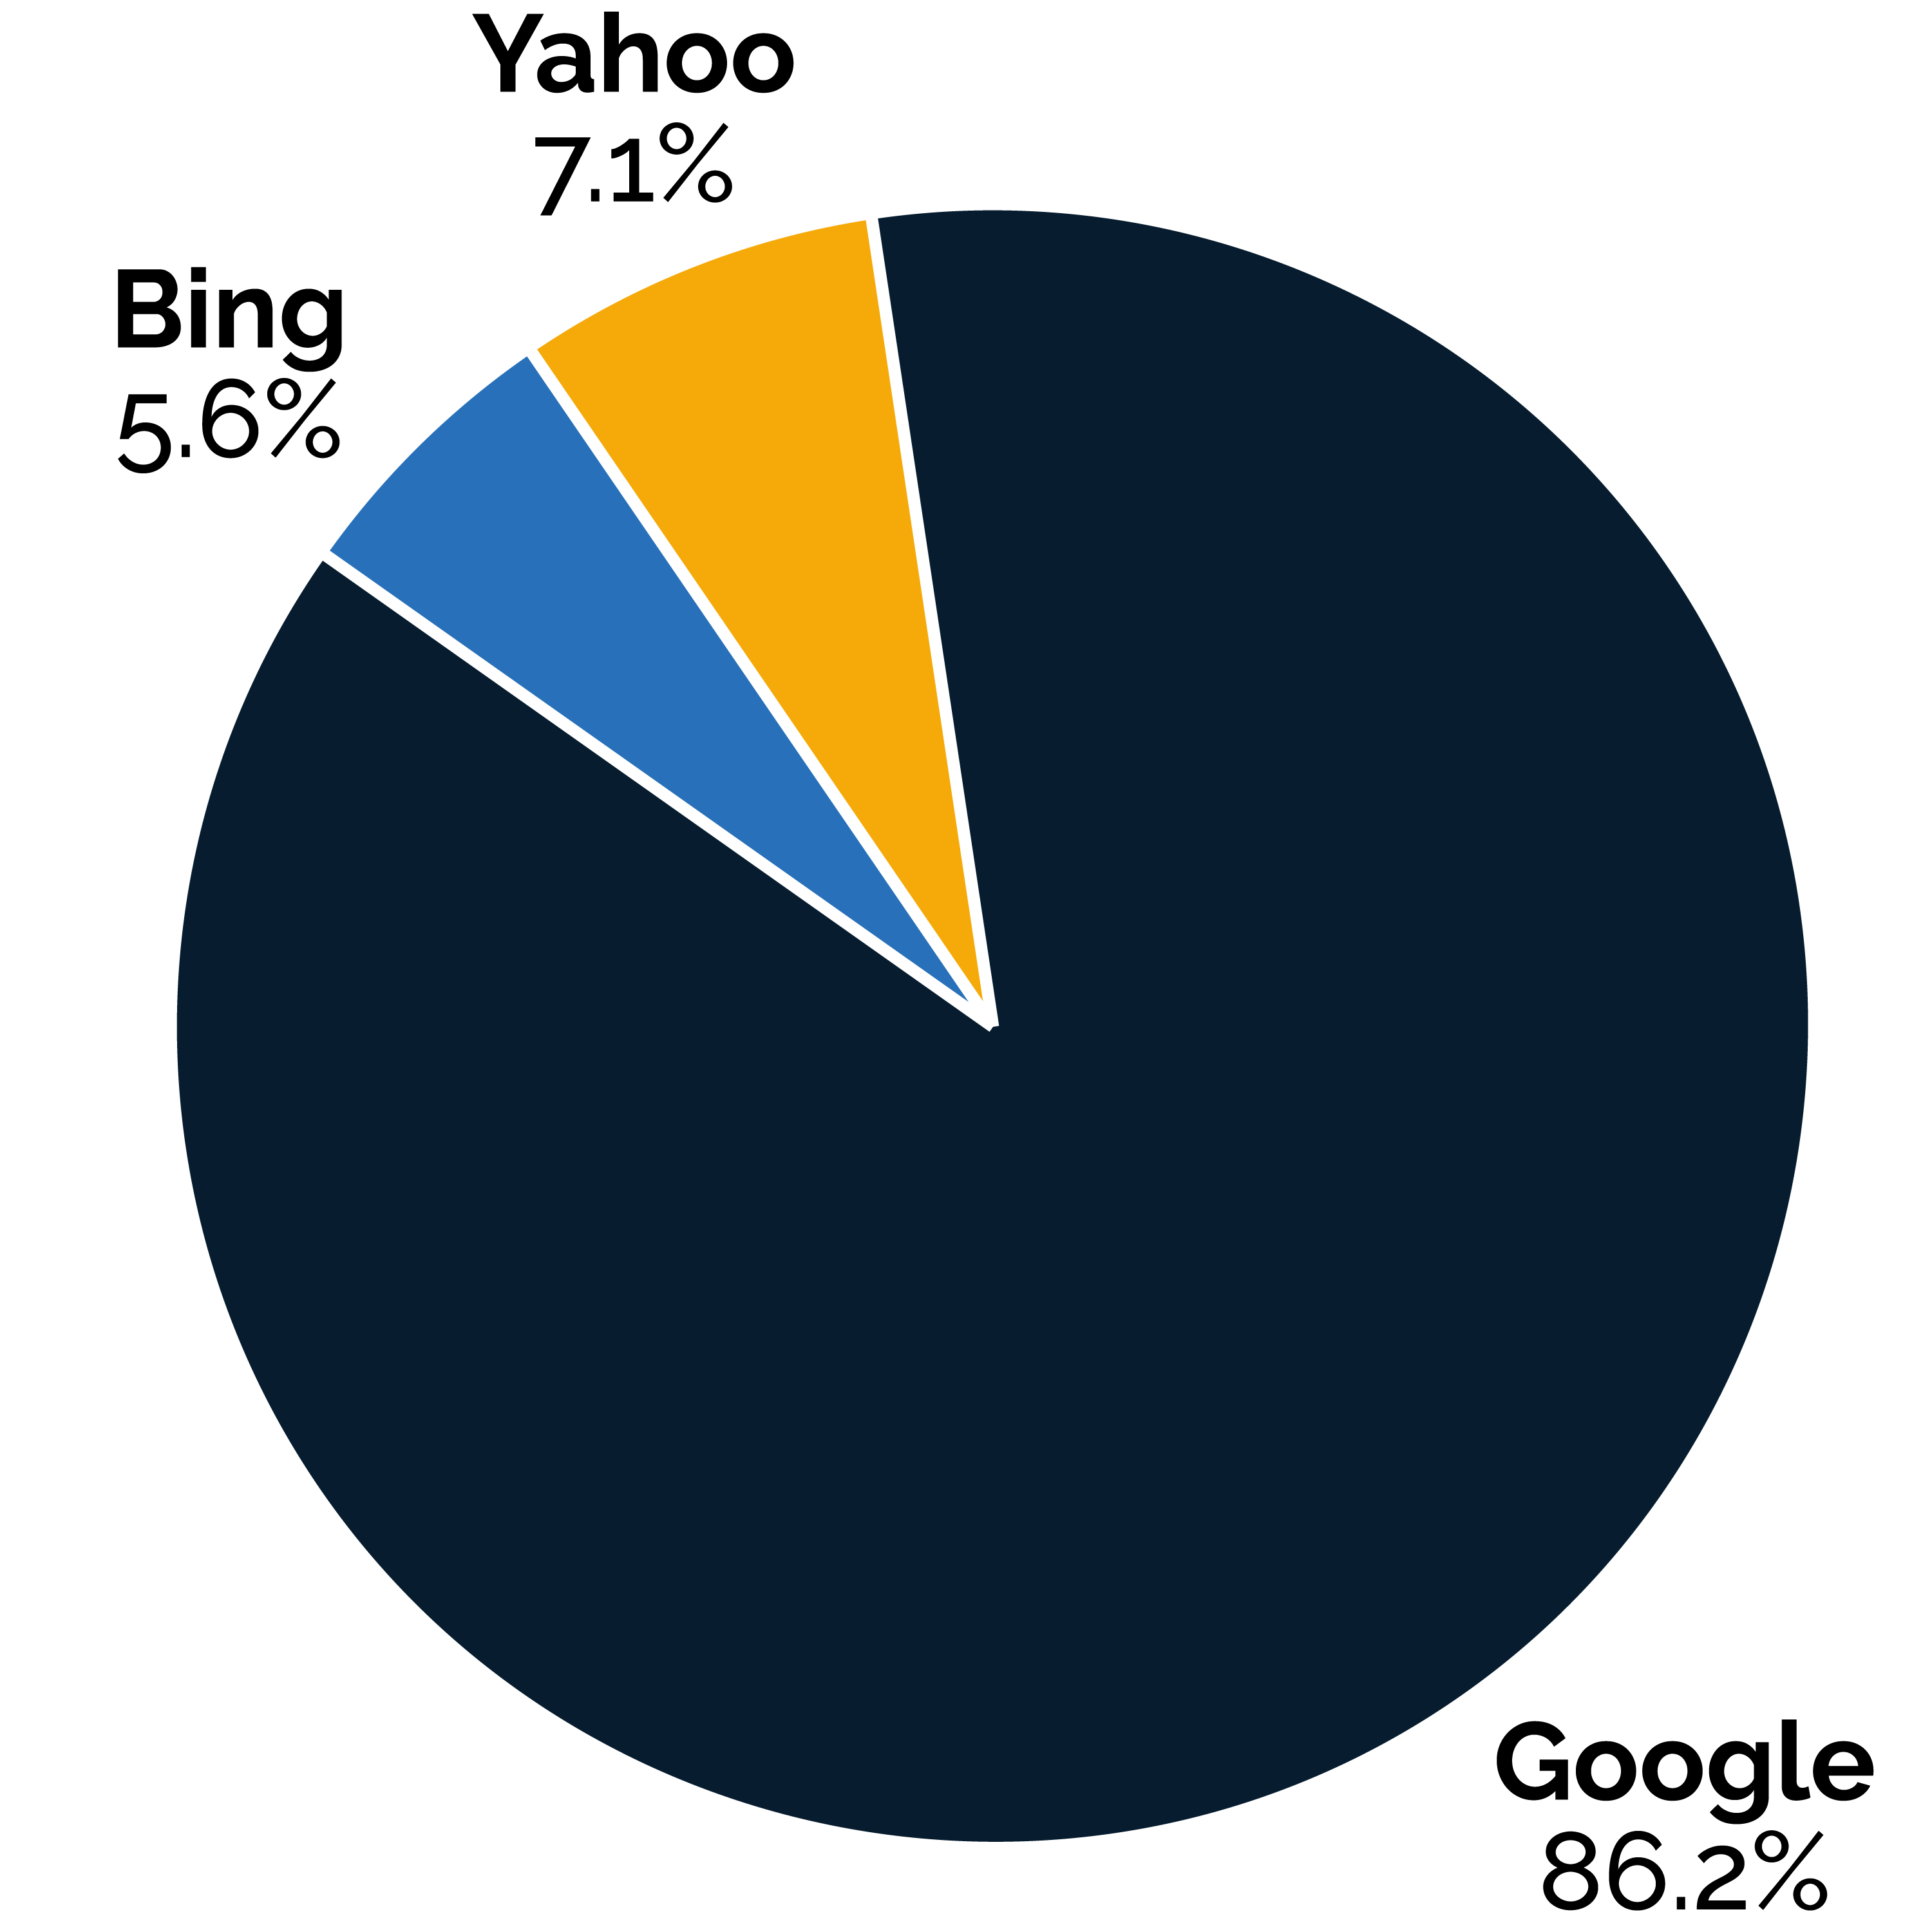 ￼Search Engine Market Share: Yahoo 7.1%, Bing 5.6%, Google 86.2% Search Engine Market Share (Source: Statista)